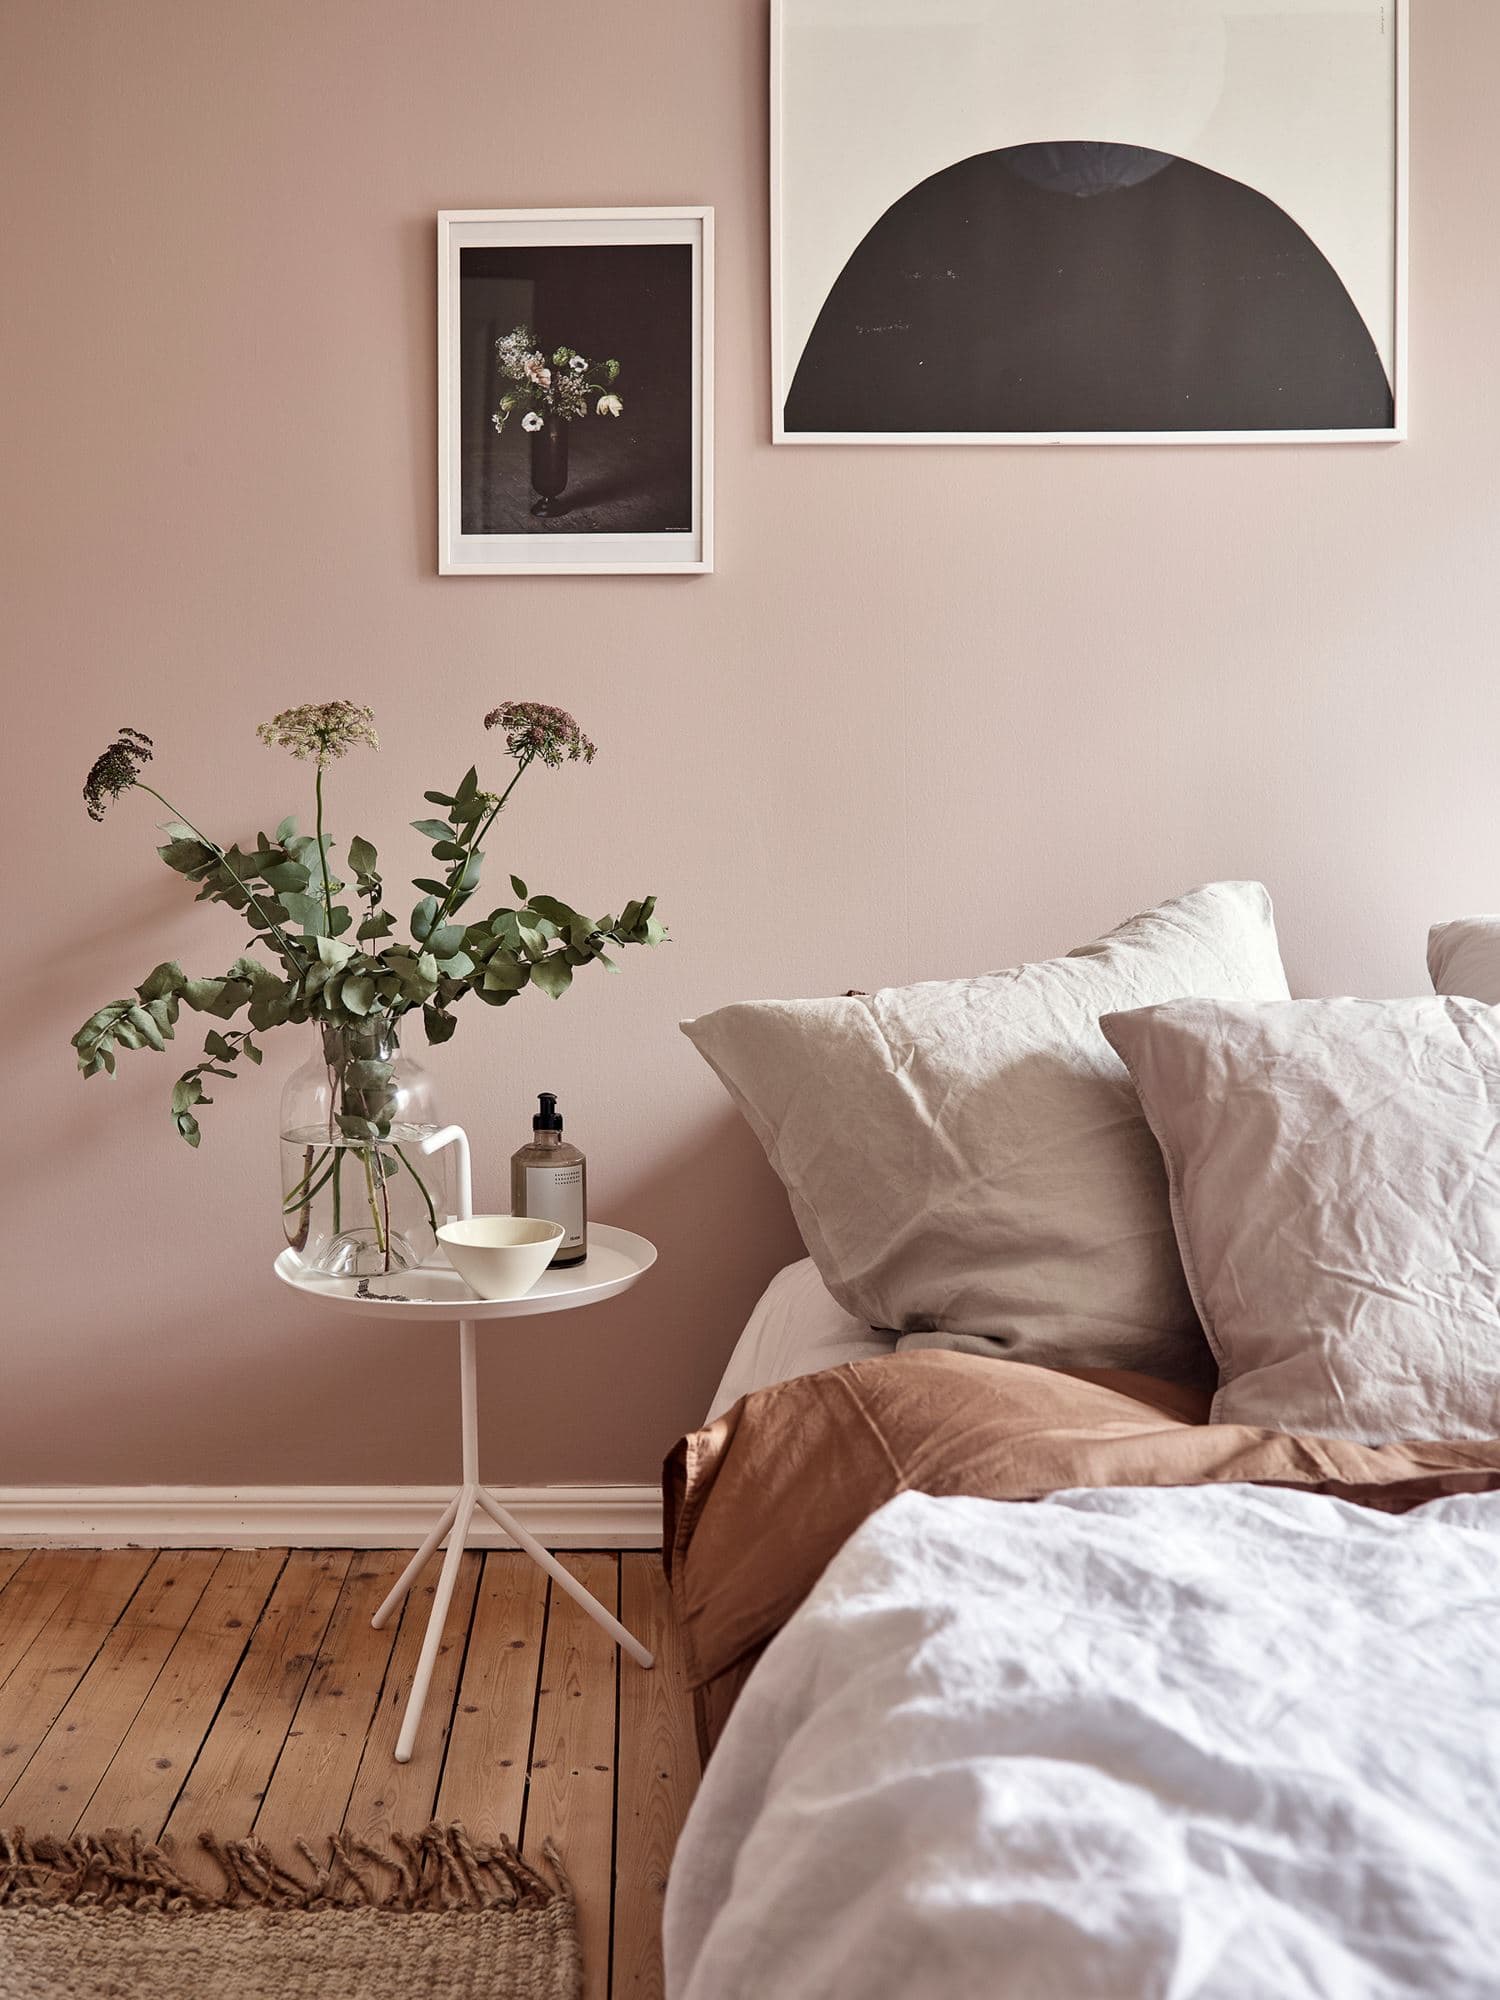 Dusty pink bedroom walls - COCO LAPINE DESIGNCOCO LAPINE DESIGN